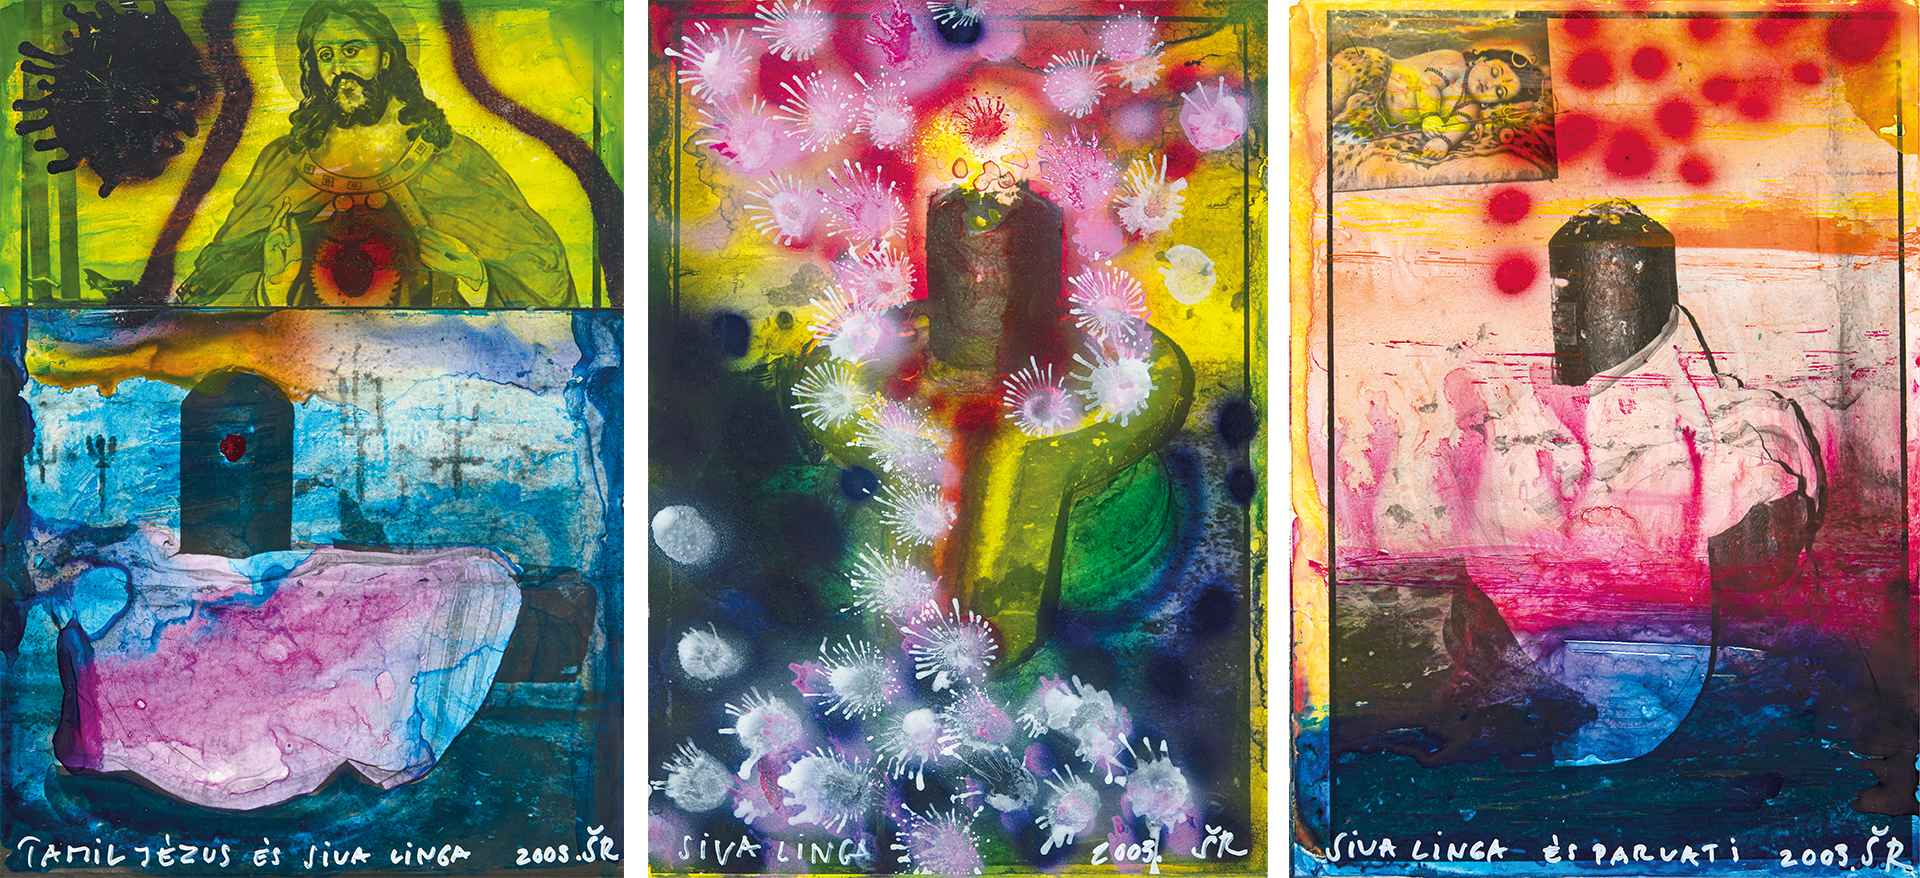 Swierkiewicz Róbert (1942-2019) Tamil Jesus and Shiva Linga, Shiva Linga, Shiva Linga and Parvati, 2003 - 3 artworks